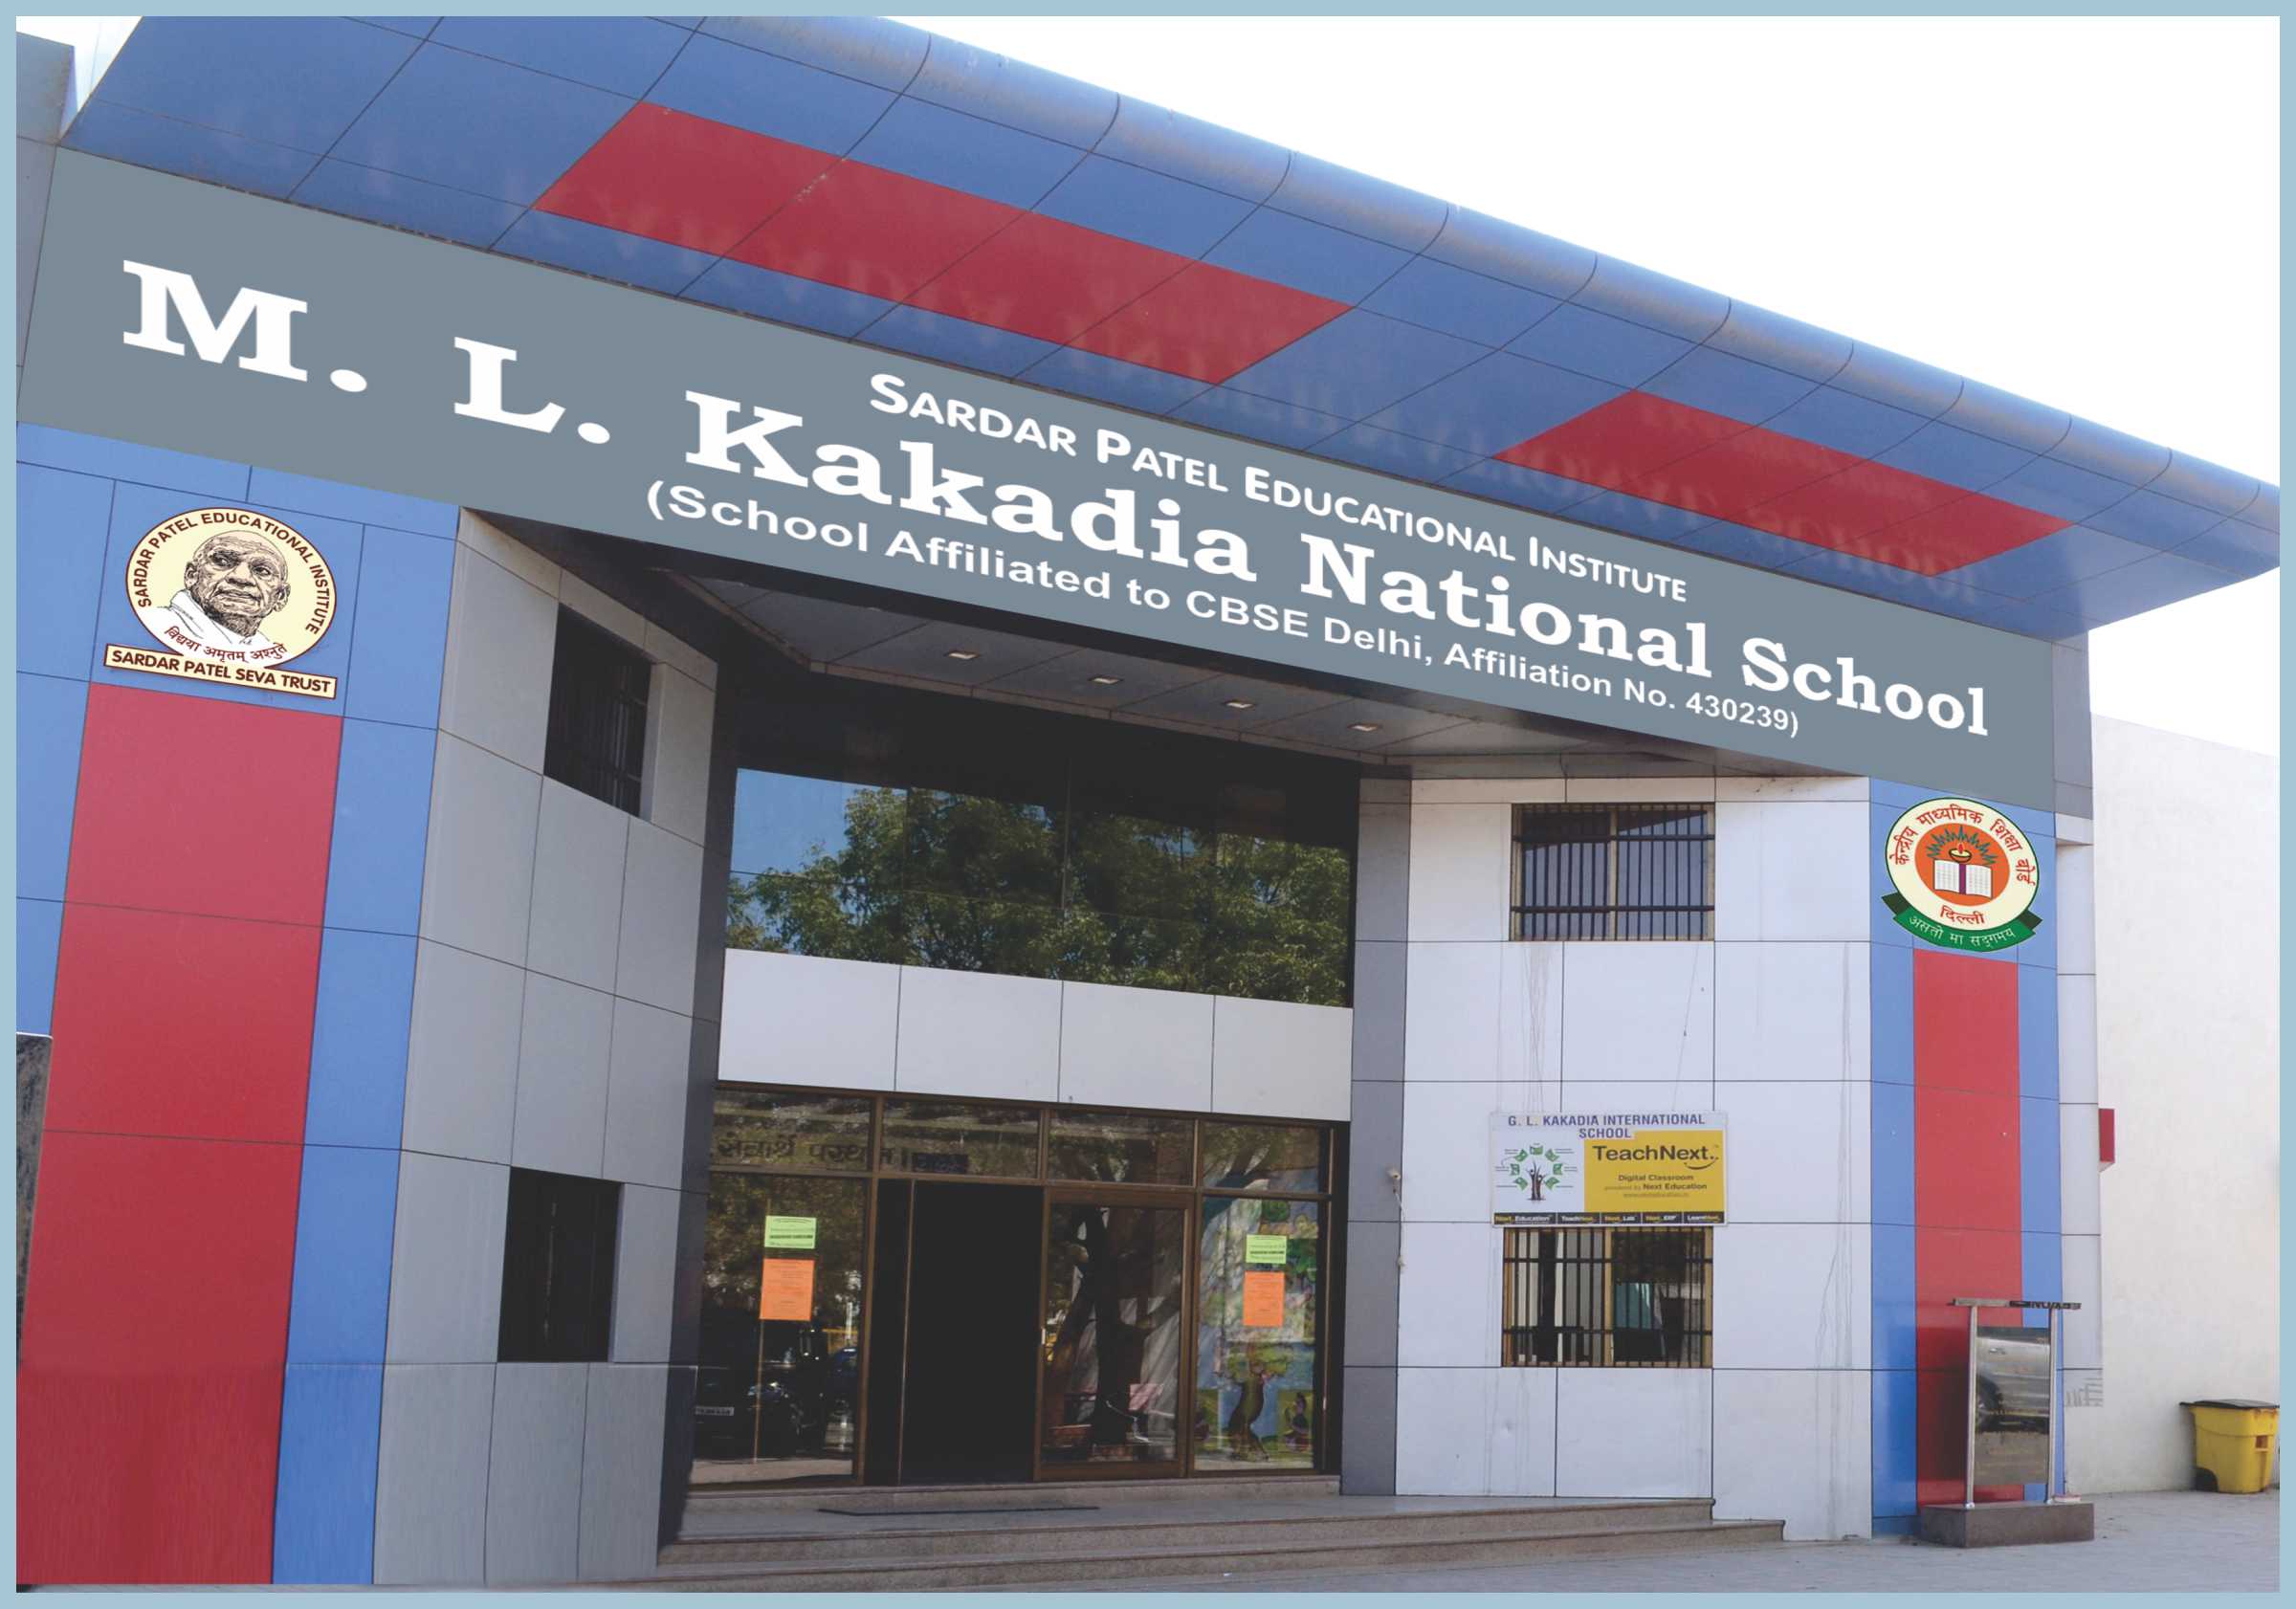 M. L. Kakadia National School